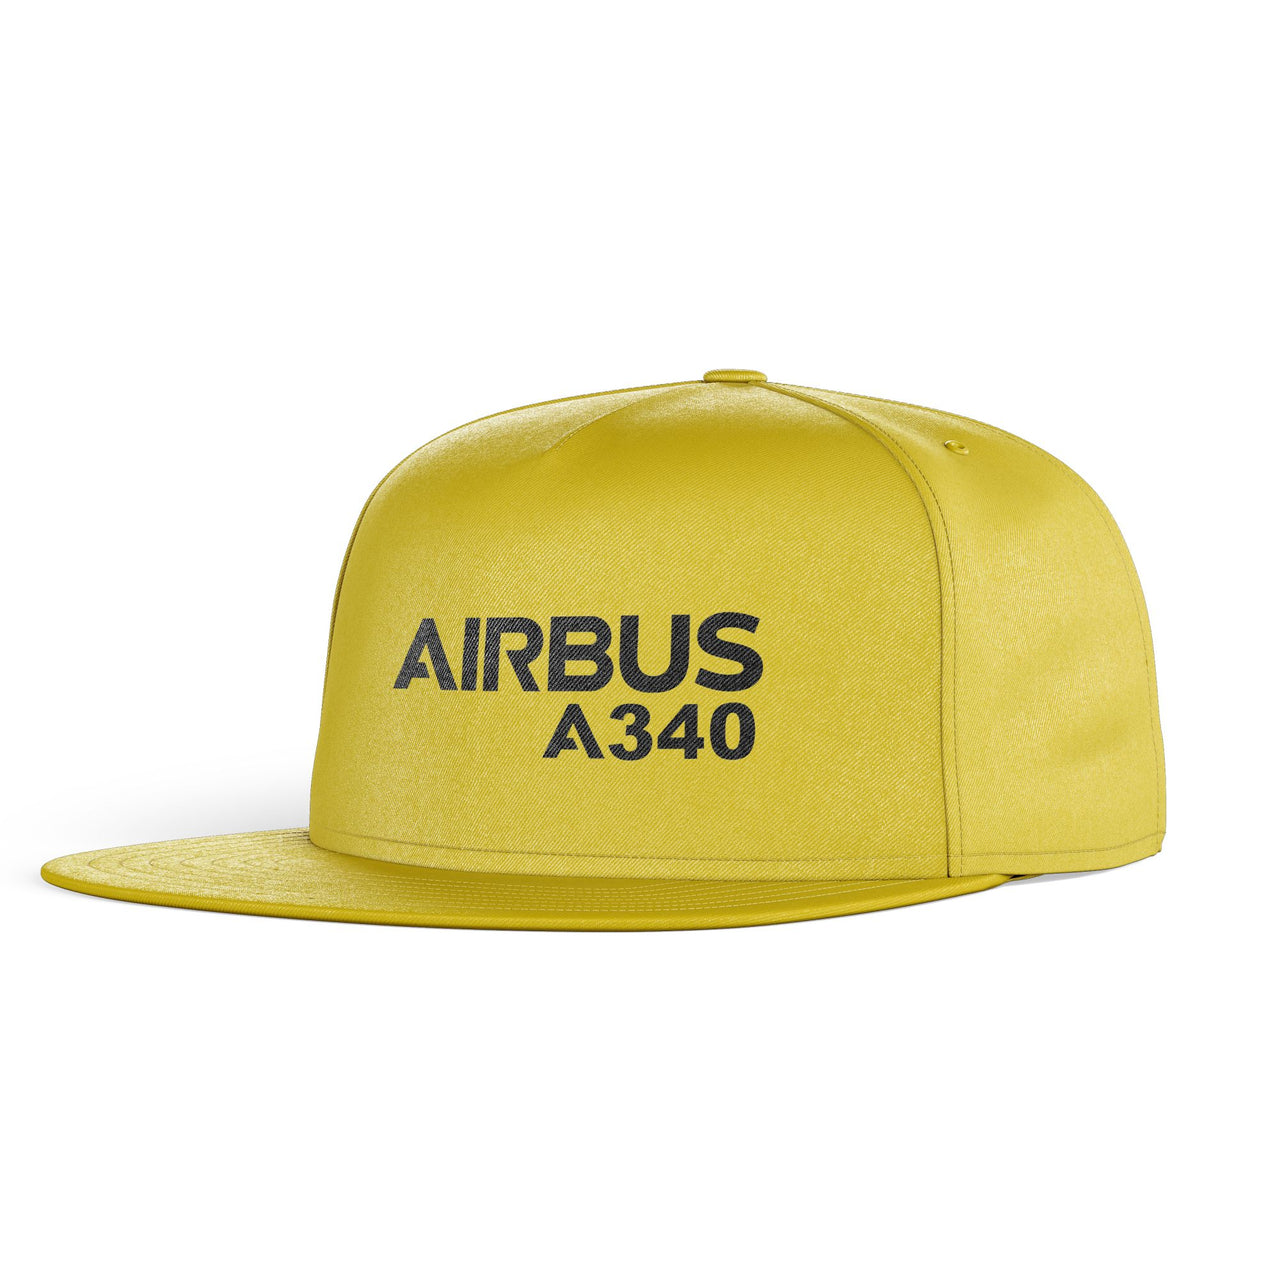 Airbus A340 & Text Designed Snapback Caps & Hats